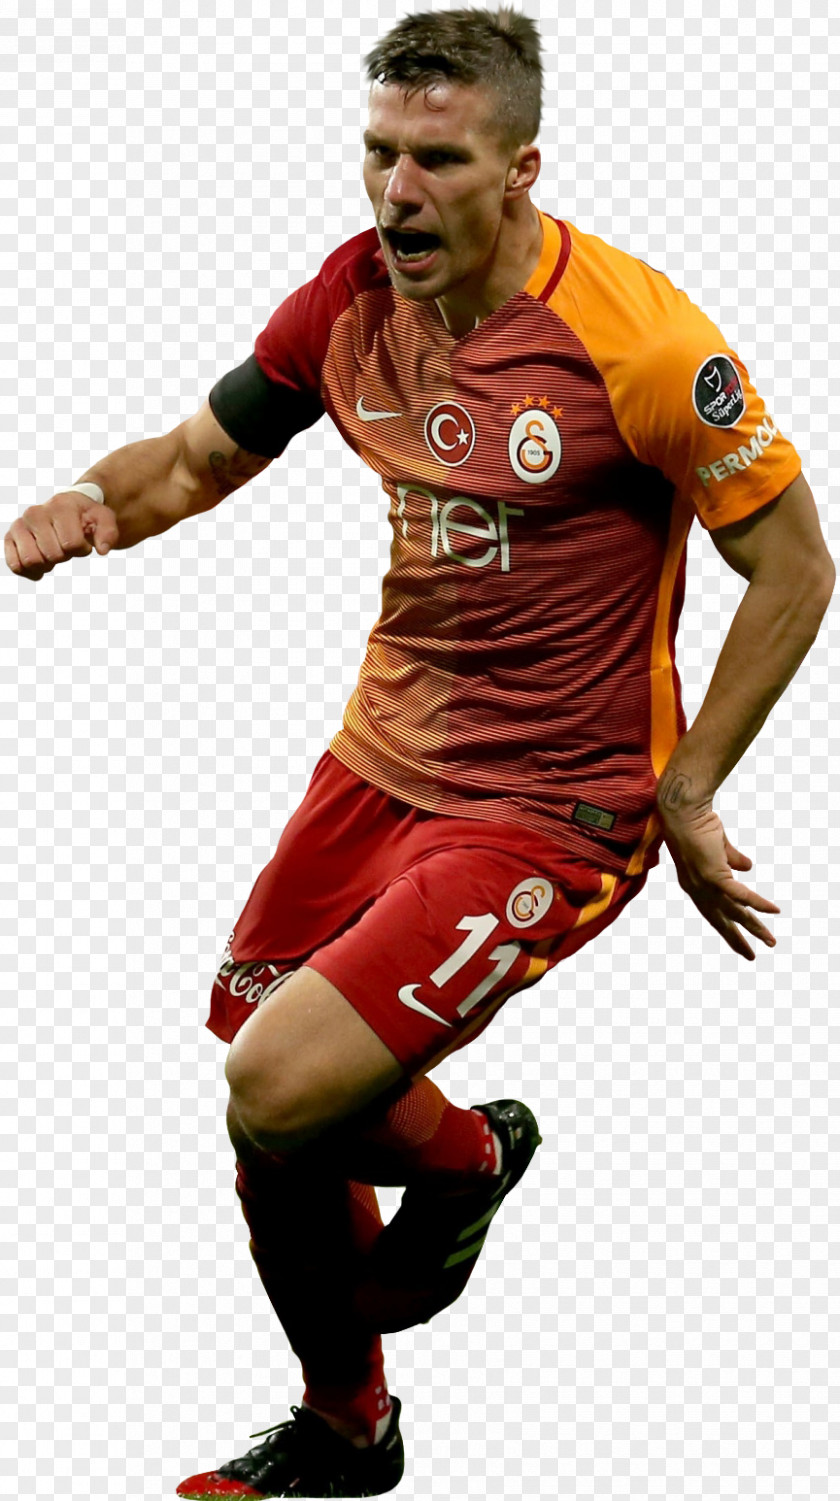 Football Lukas Podolski Galatasaray S.K. Germany National Team Player PNG